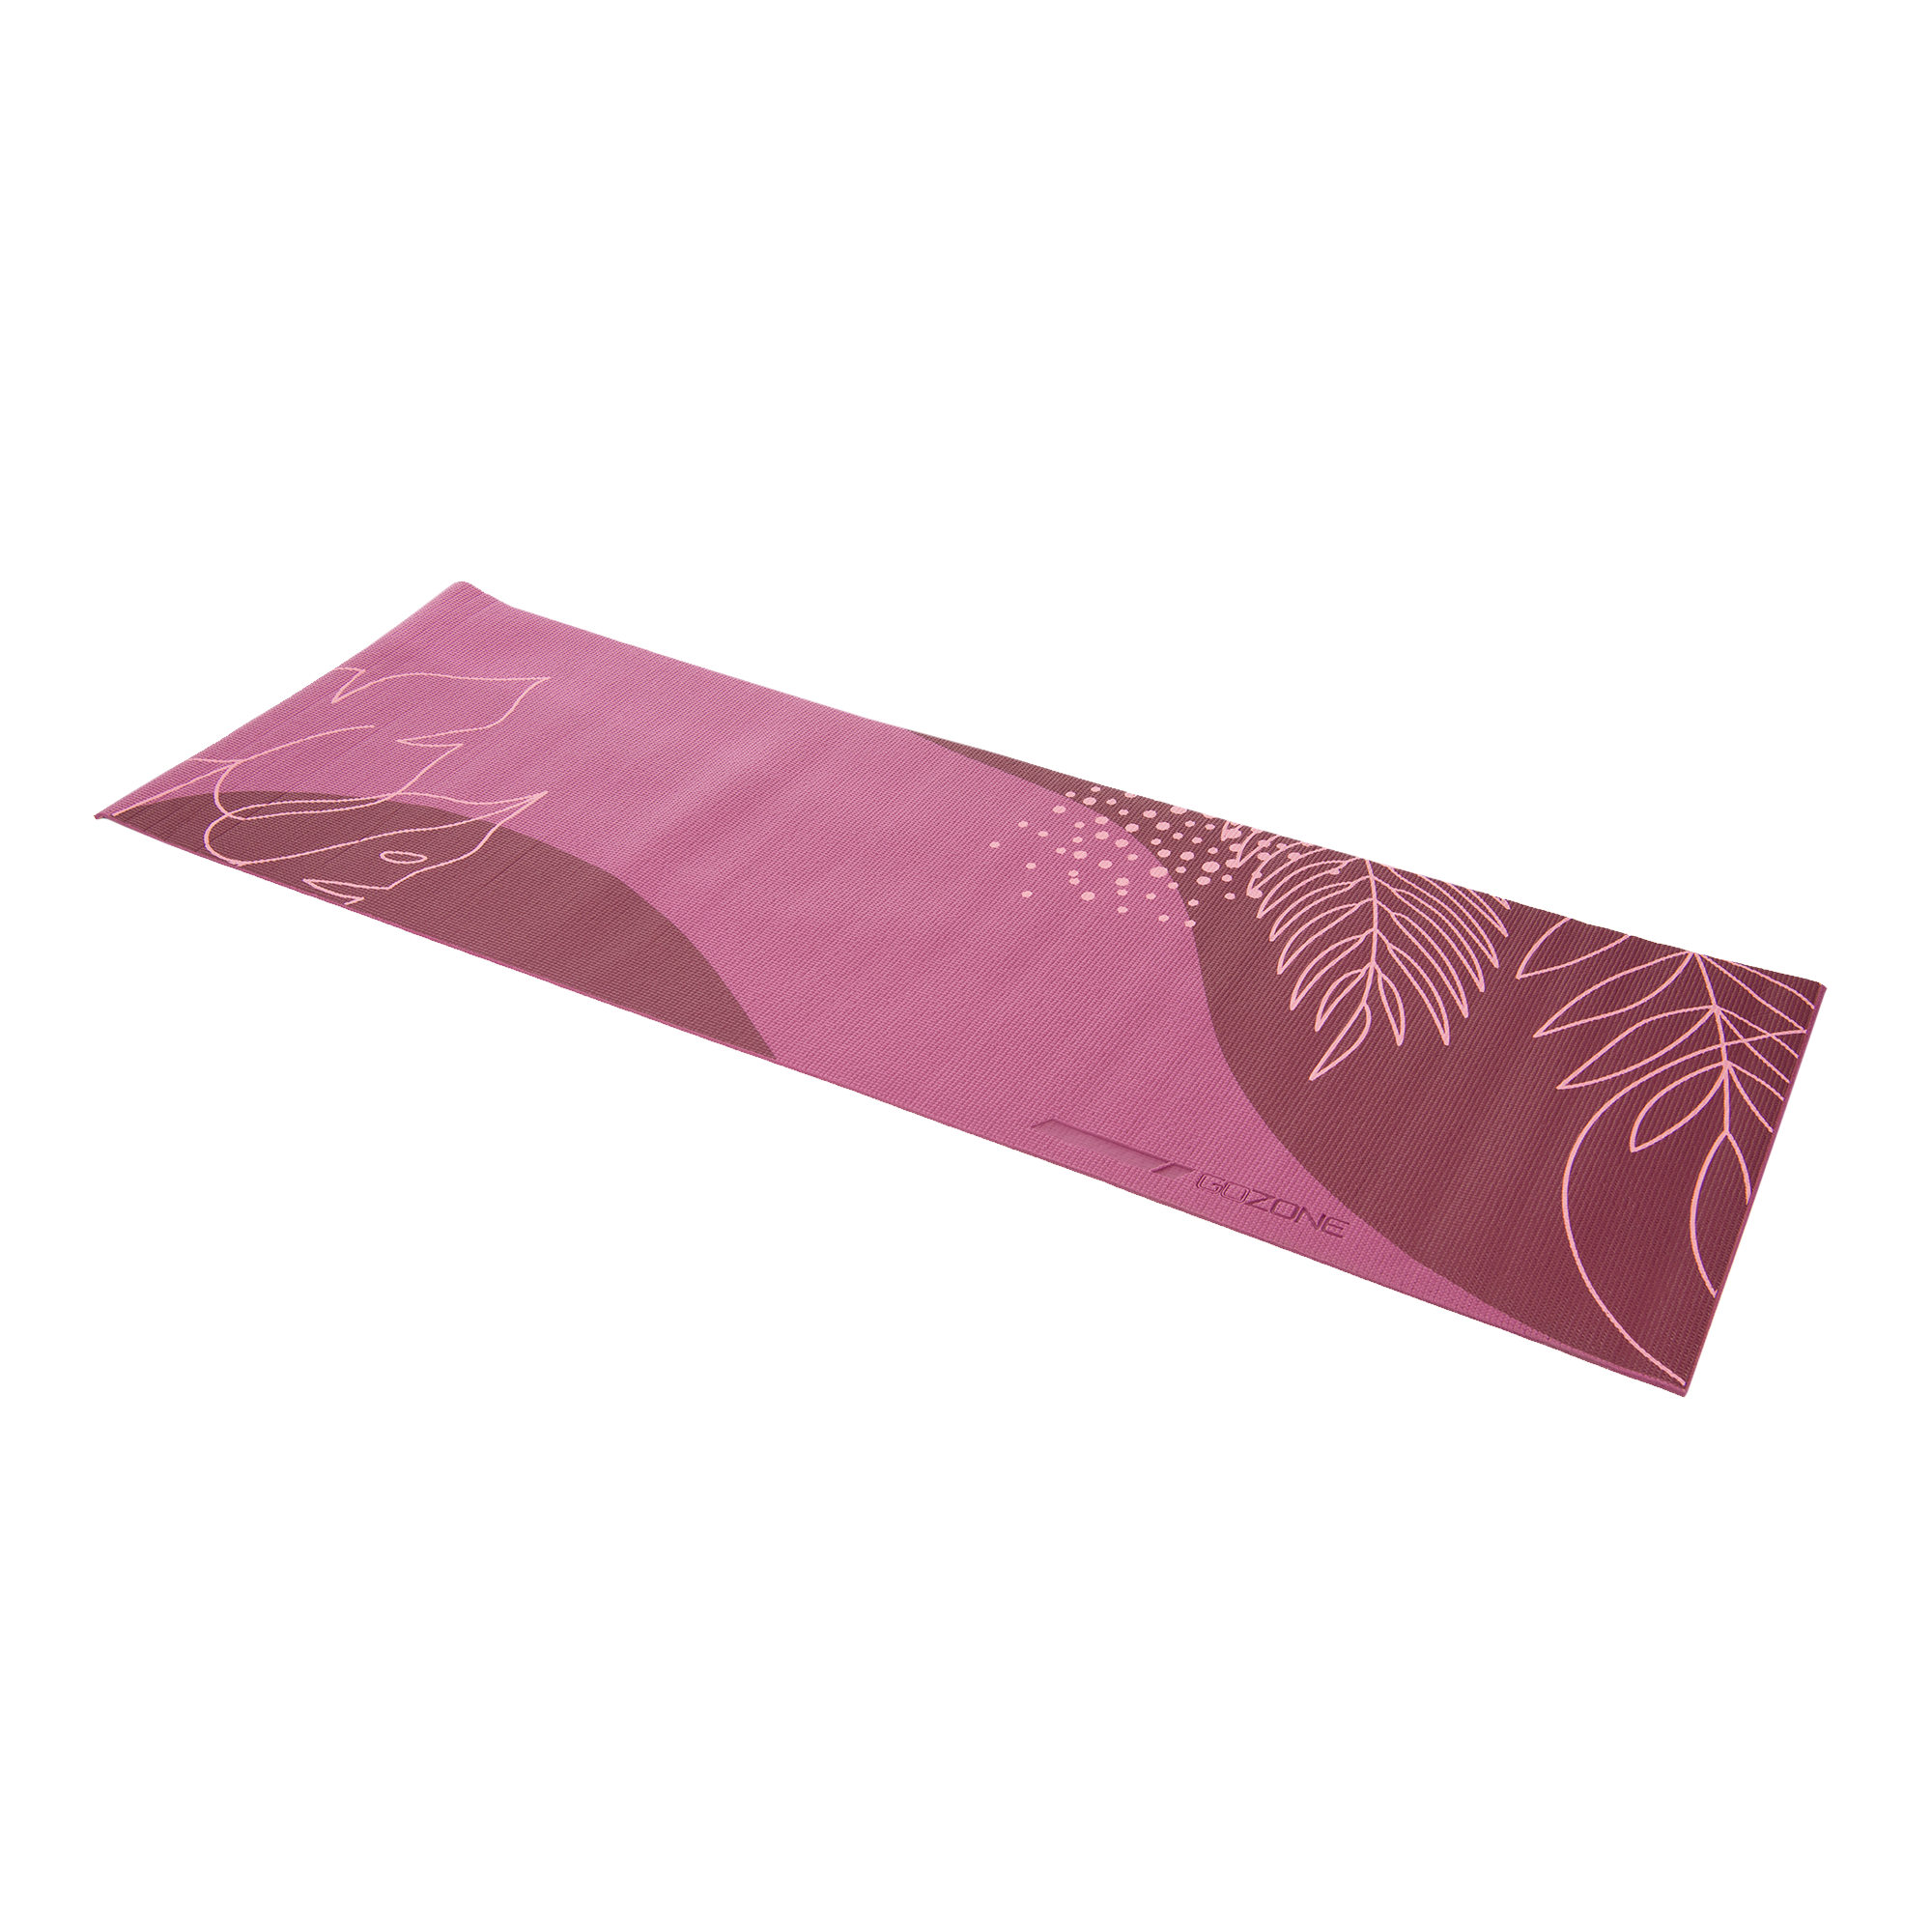 Gaiam Sublime Sky Yoga Mat - Berry Pink (4mm) : Target